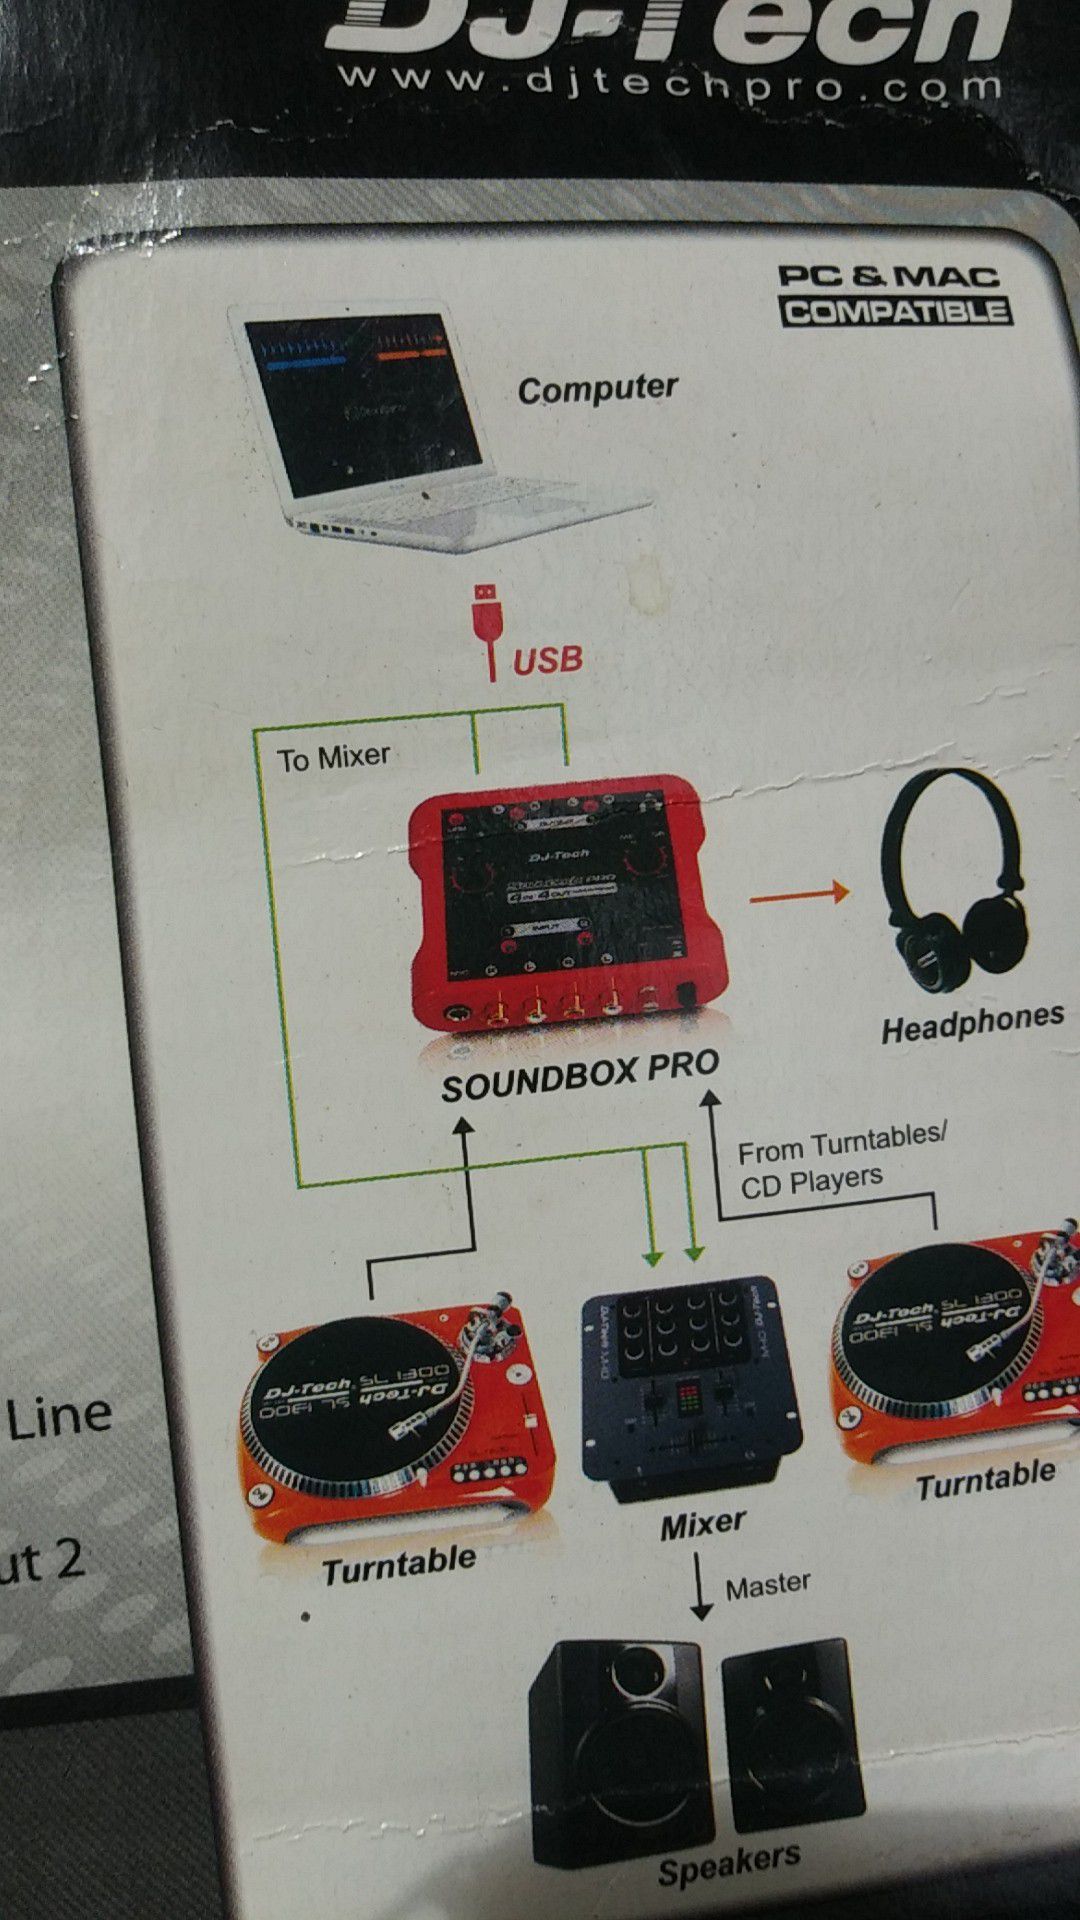 Its a soundbox pro includes a Audio Driver CD -ROM. 4 pcs 1m RCA Cable (2 x Red+2 x blue)